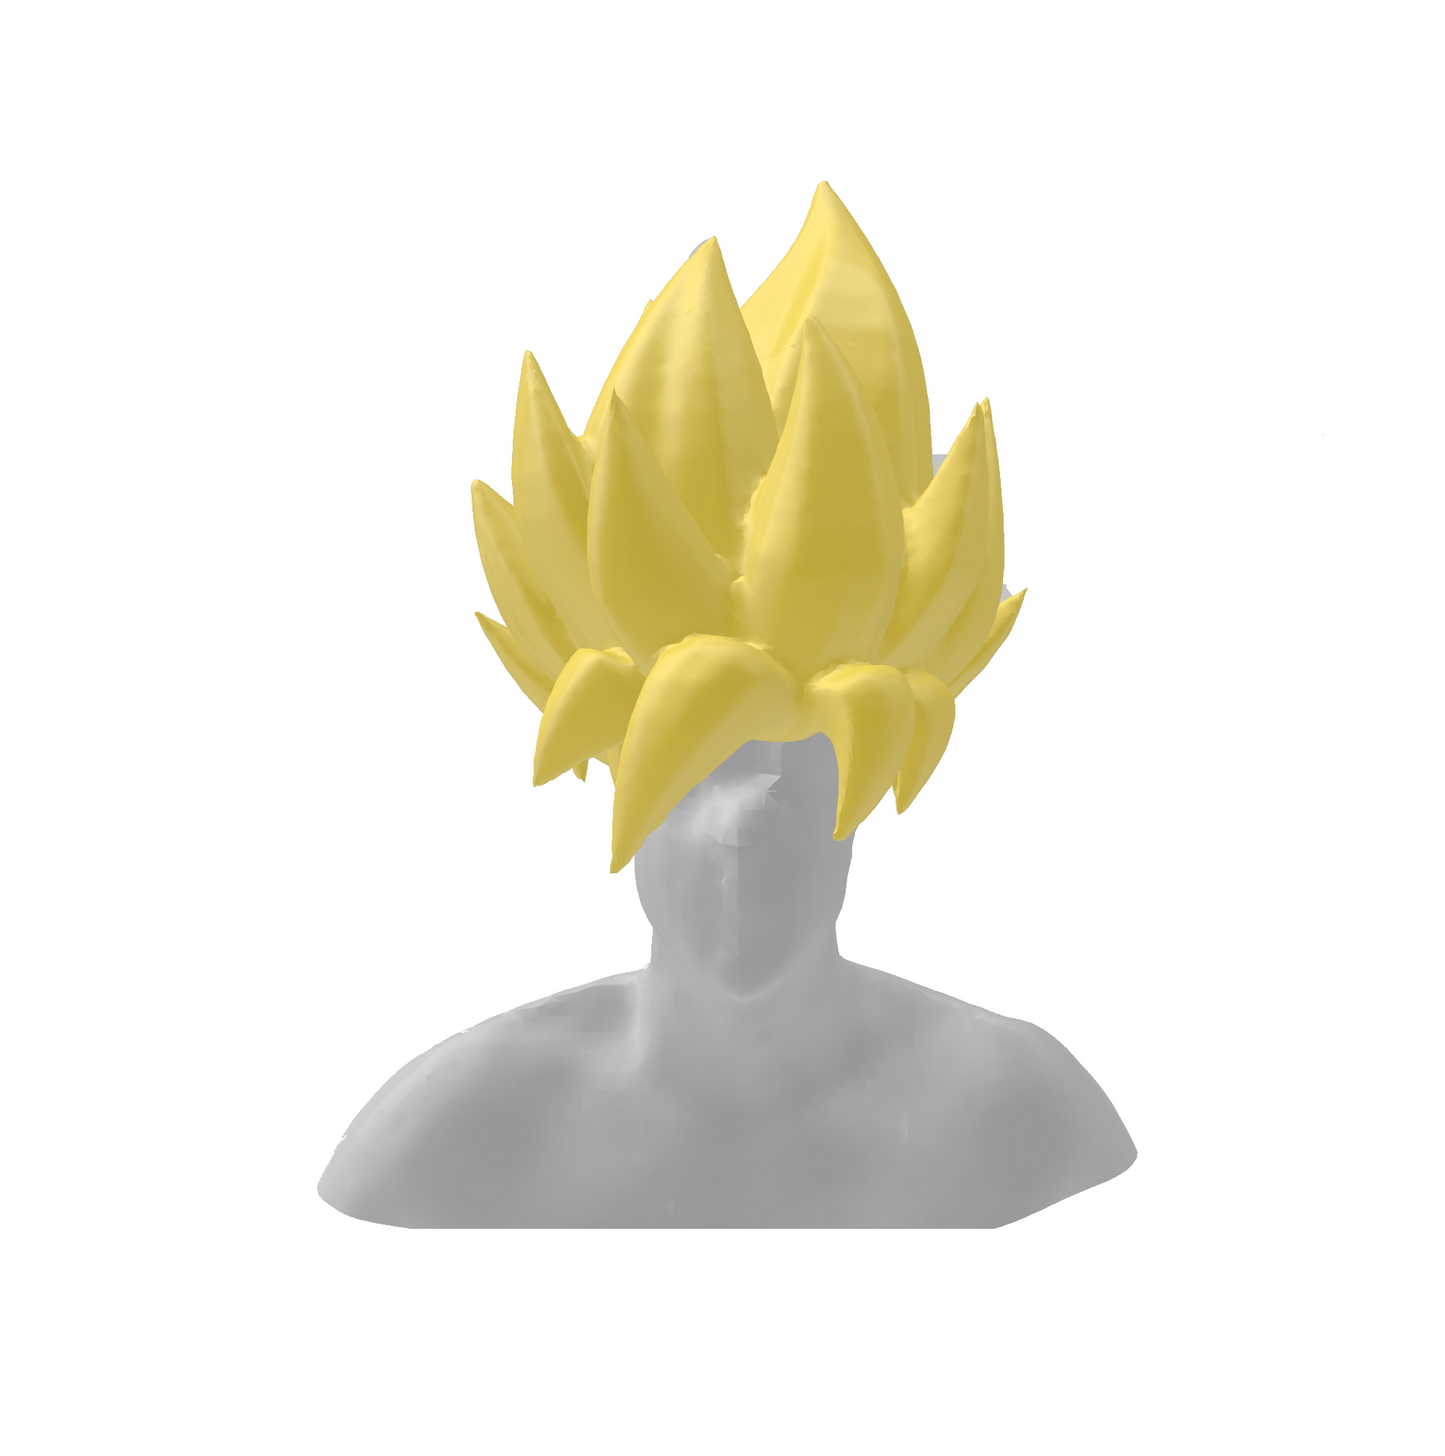 Goku Super - Digital 3D Model Files and Physical 3D Printed Kit Options - DBS Cosplay - Goku Cosplay - Goku Hair